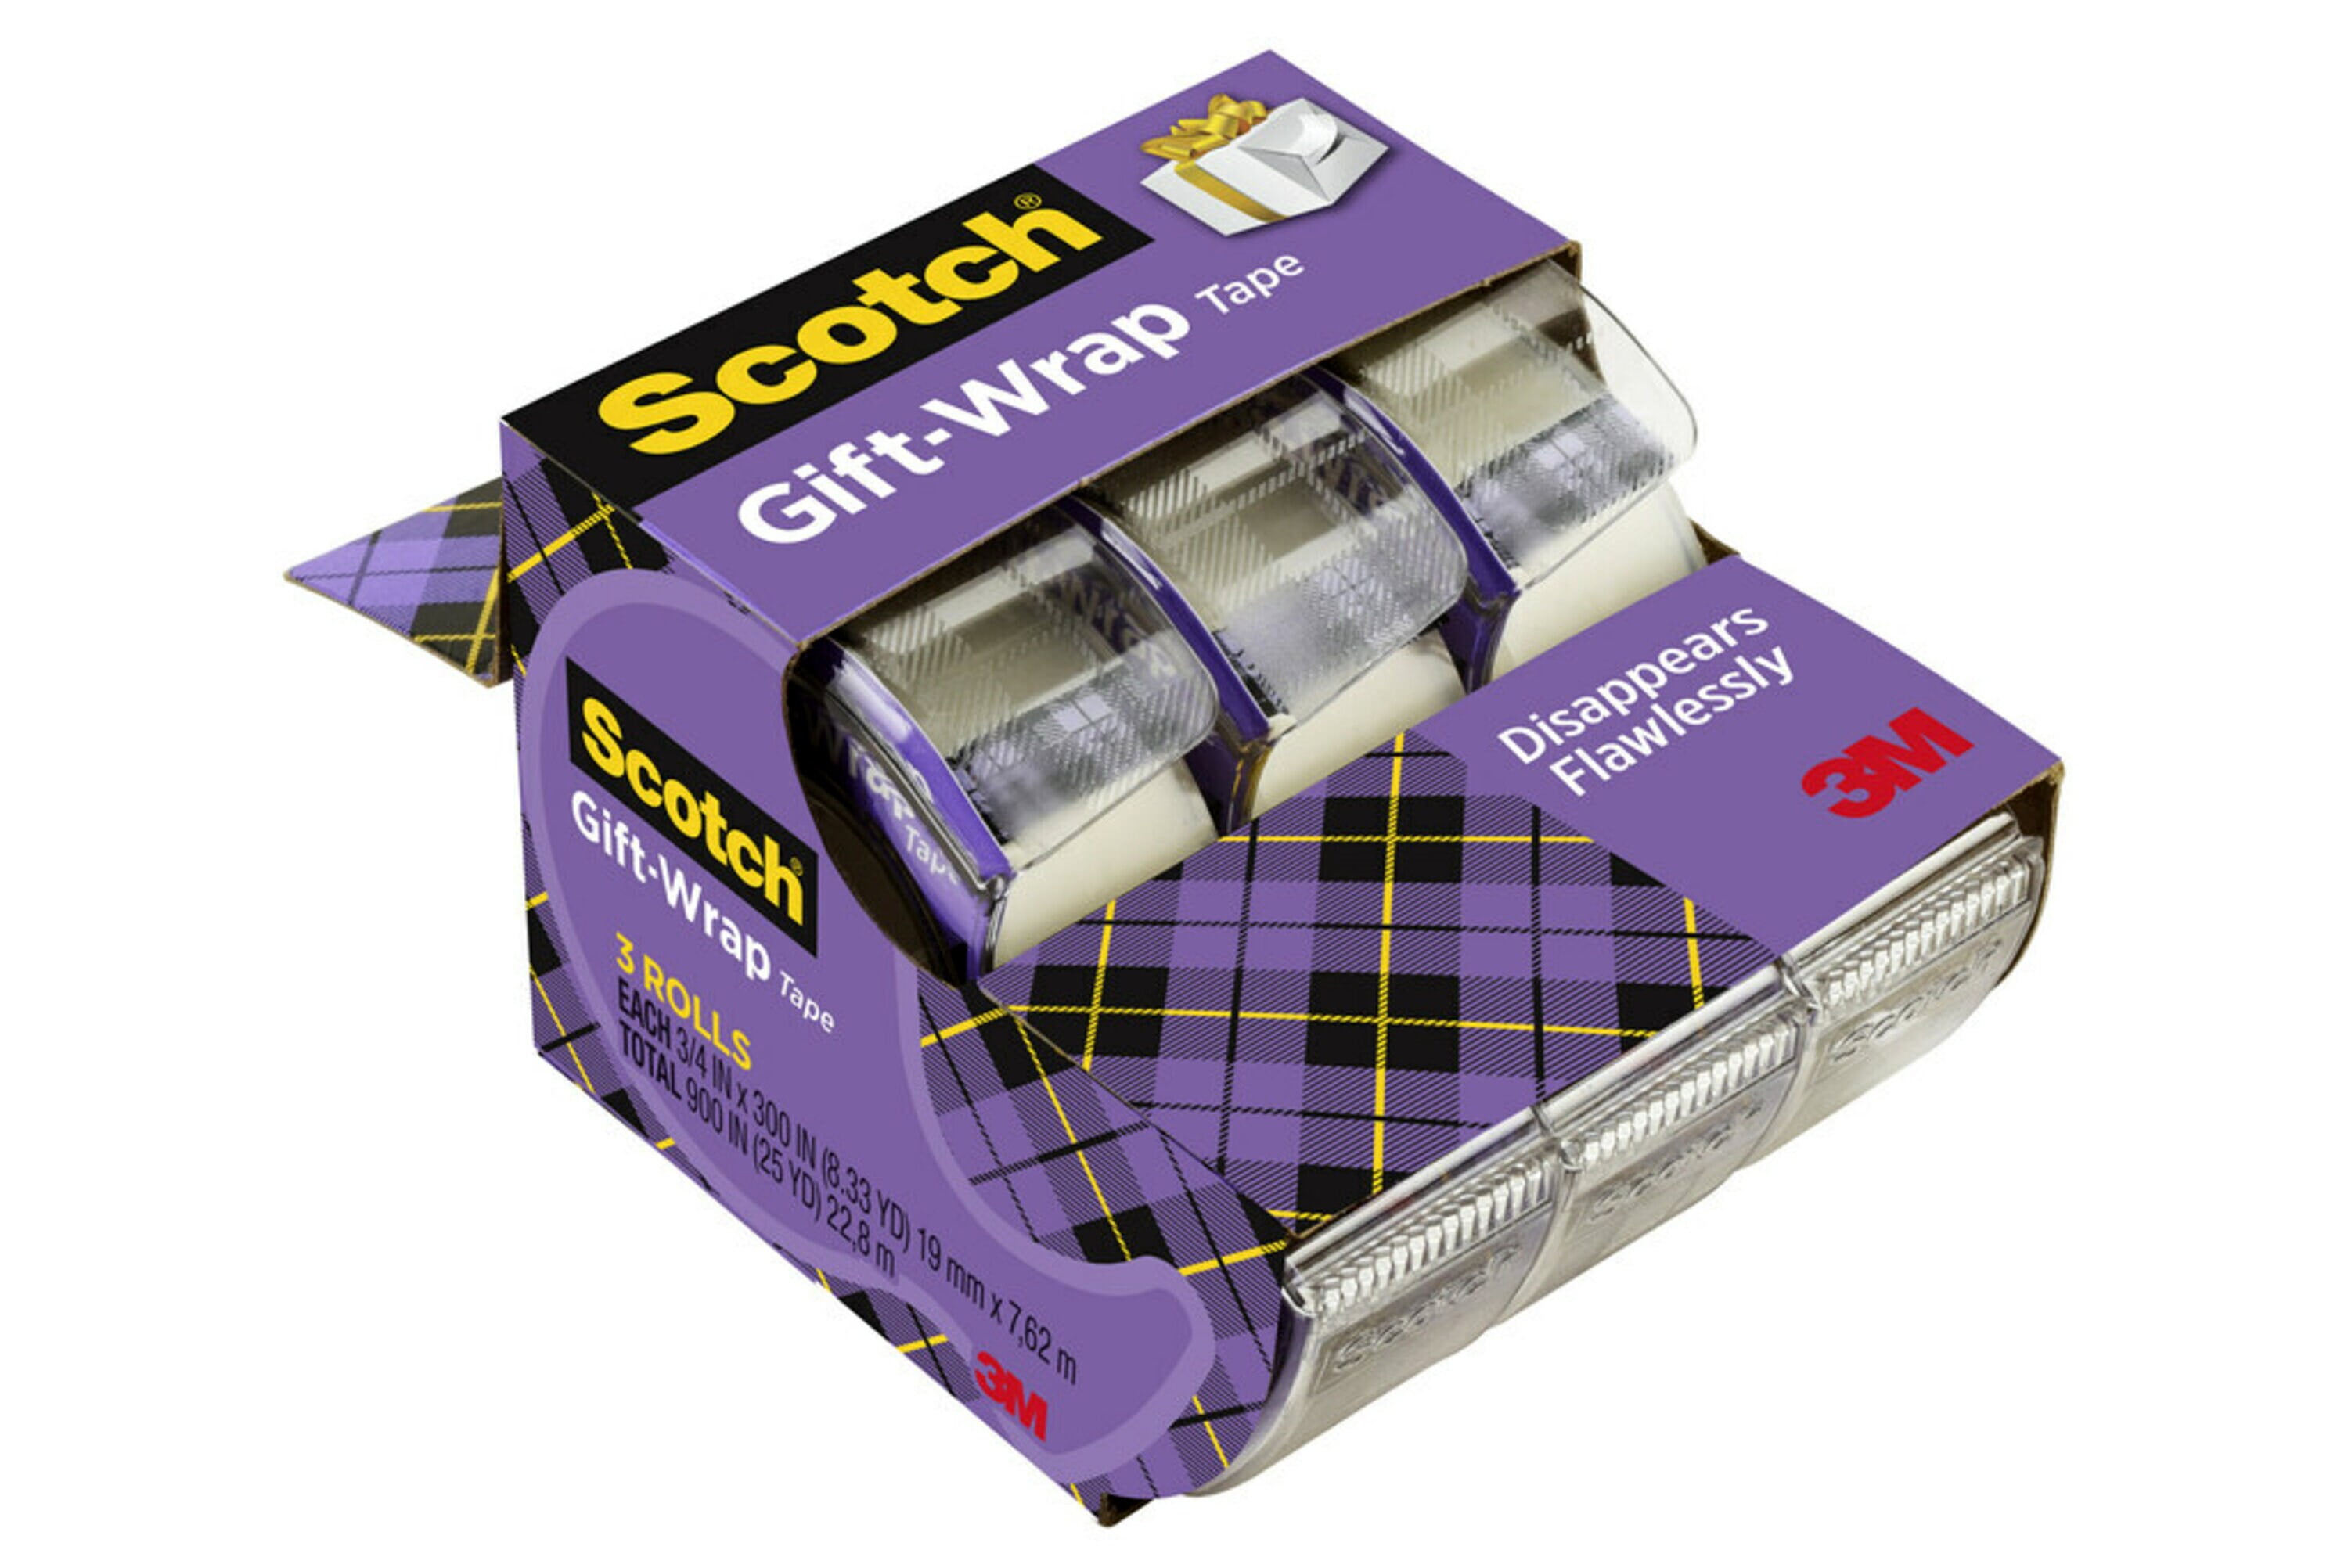 Scotch 7 Empty Reel, Series 3, Dark Shaded Triple Window, New Box + Bag